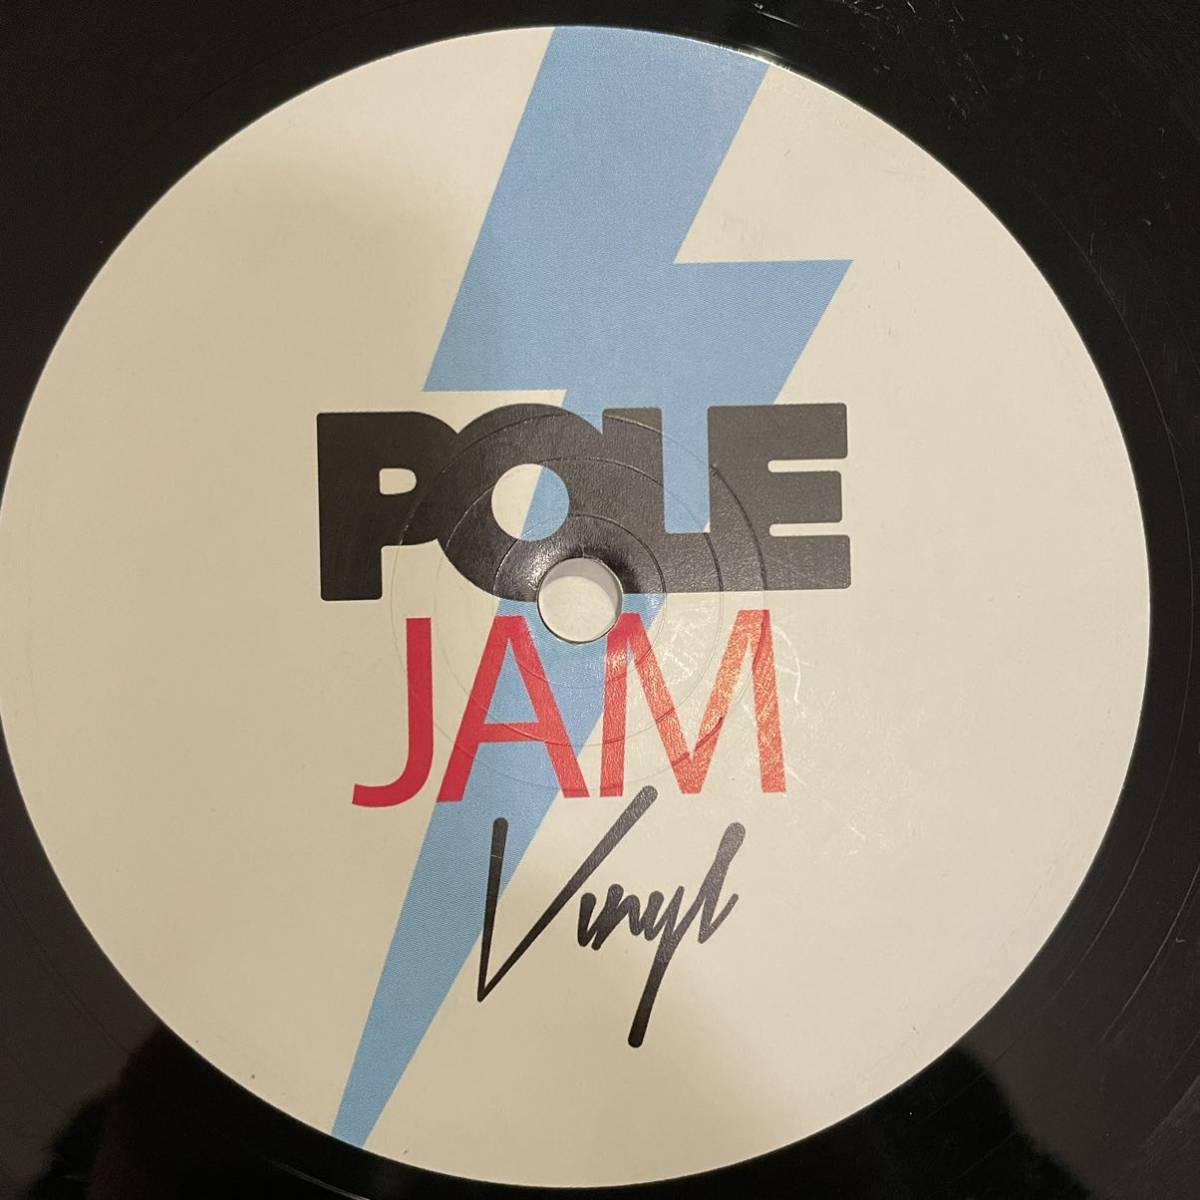 【12inch レコード】Various 「Native Circles EP」Pole Jam Vinyl PJV002_画像2